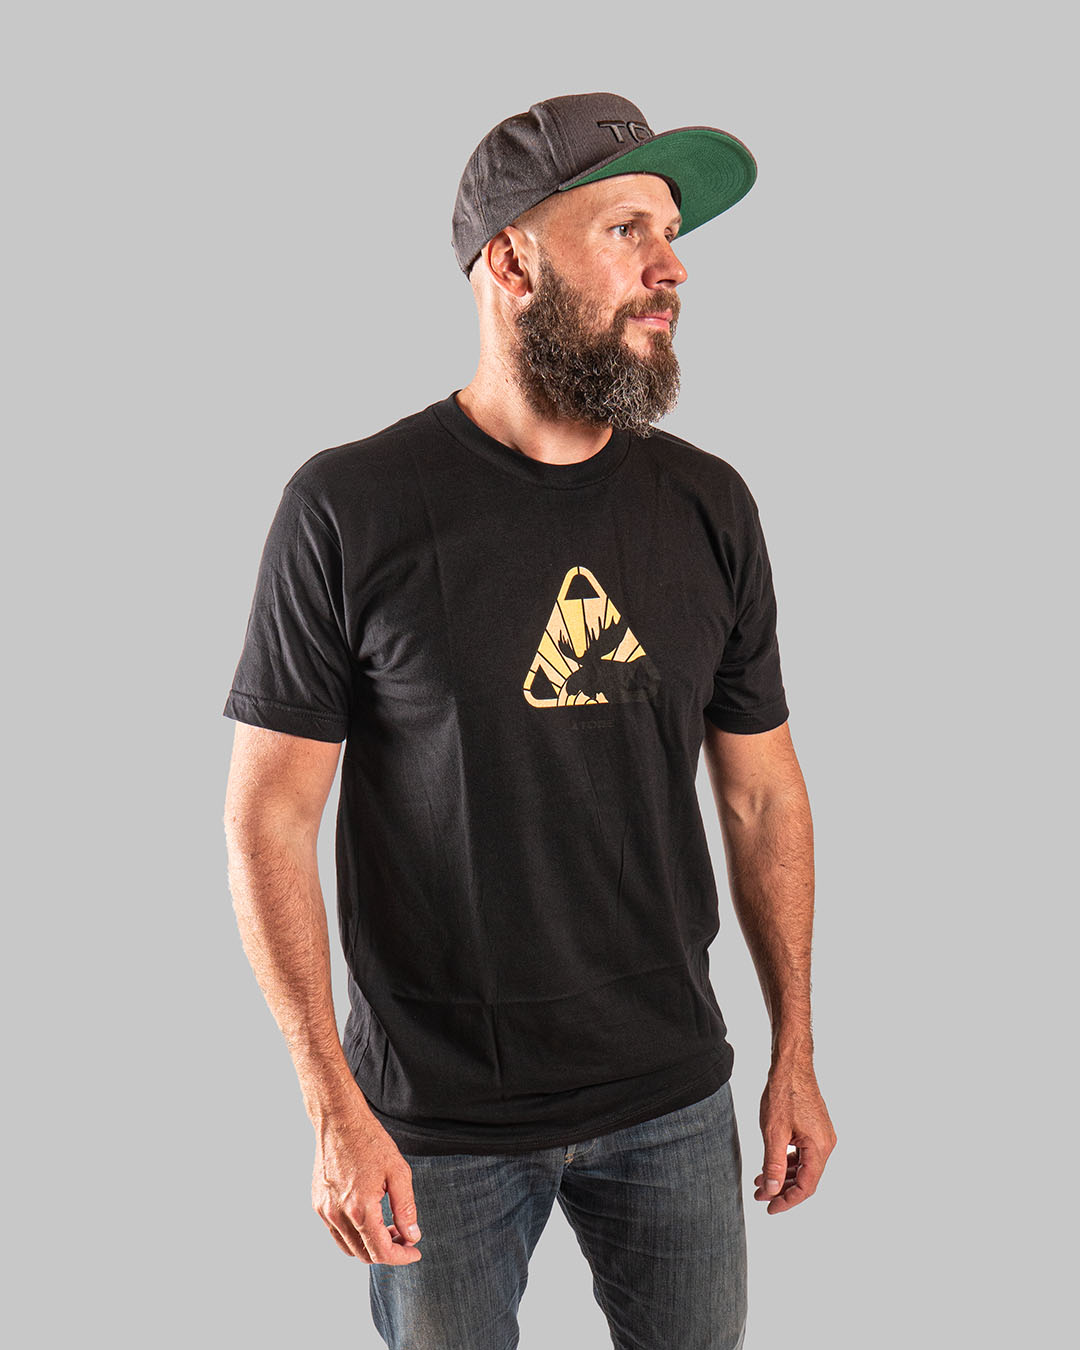 TOBE Moose T-Shirt (Non-Current)